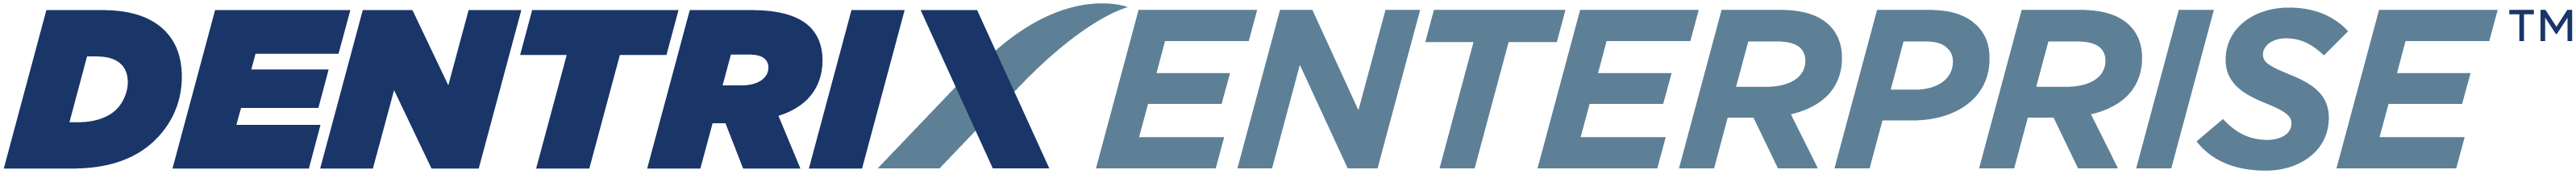 Dentrix Enterprise Logo